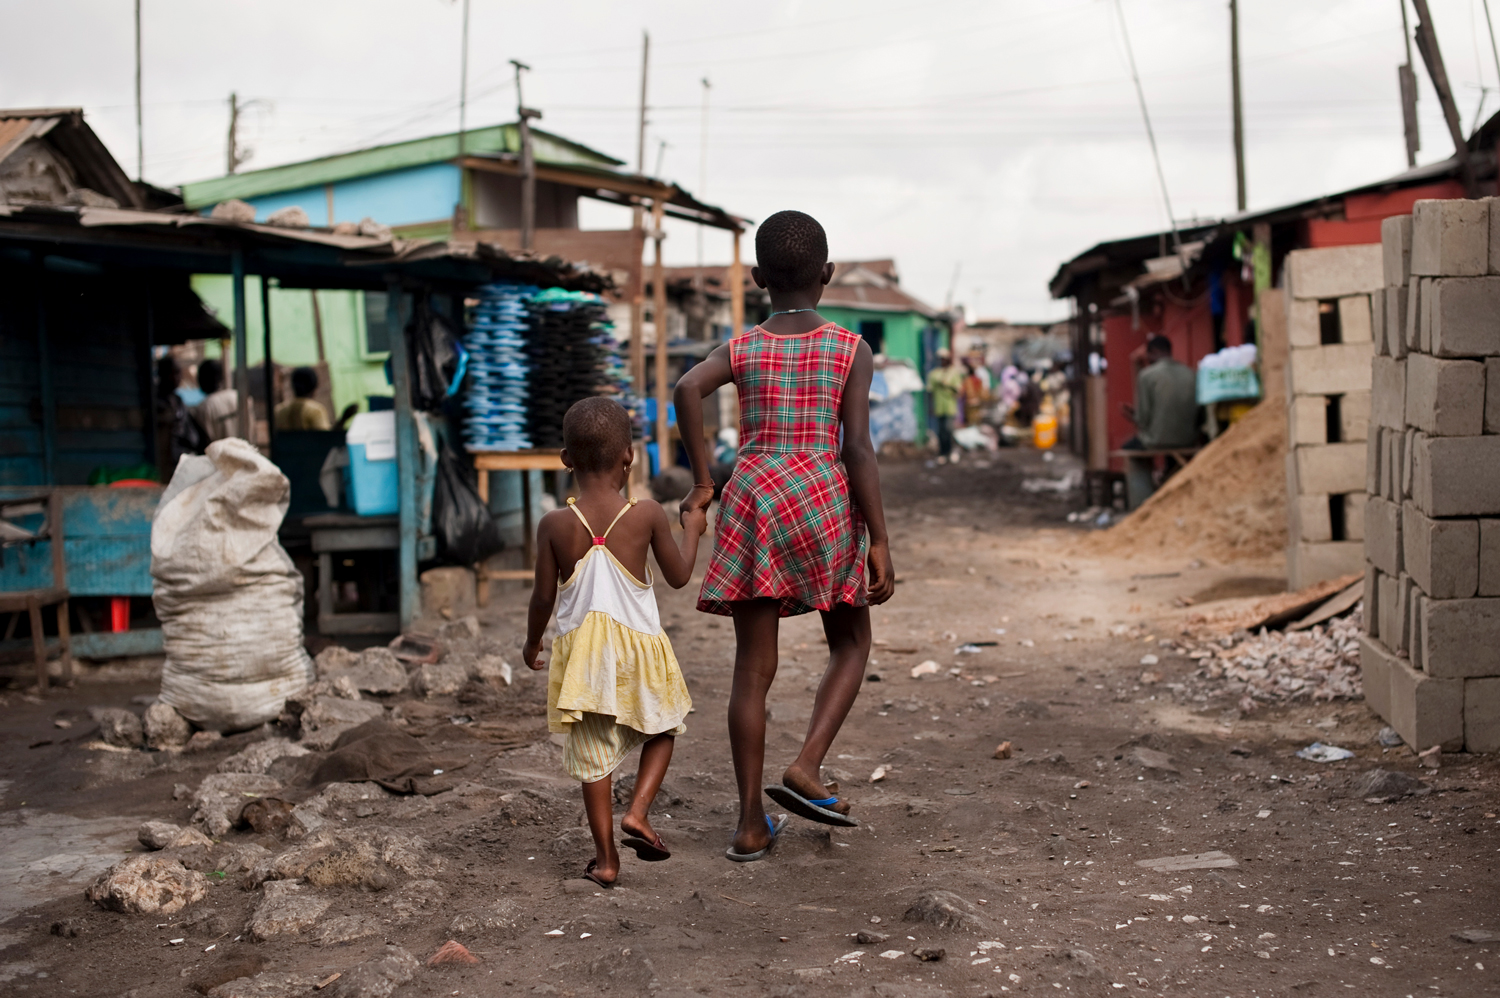 Slum dwellers are not considered homeless in Ghana.